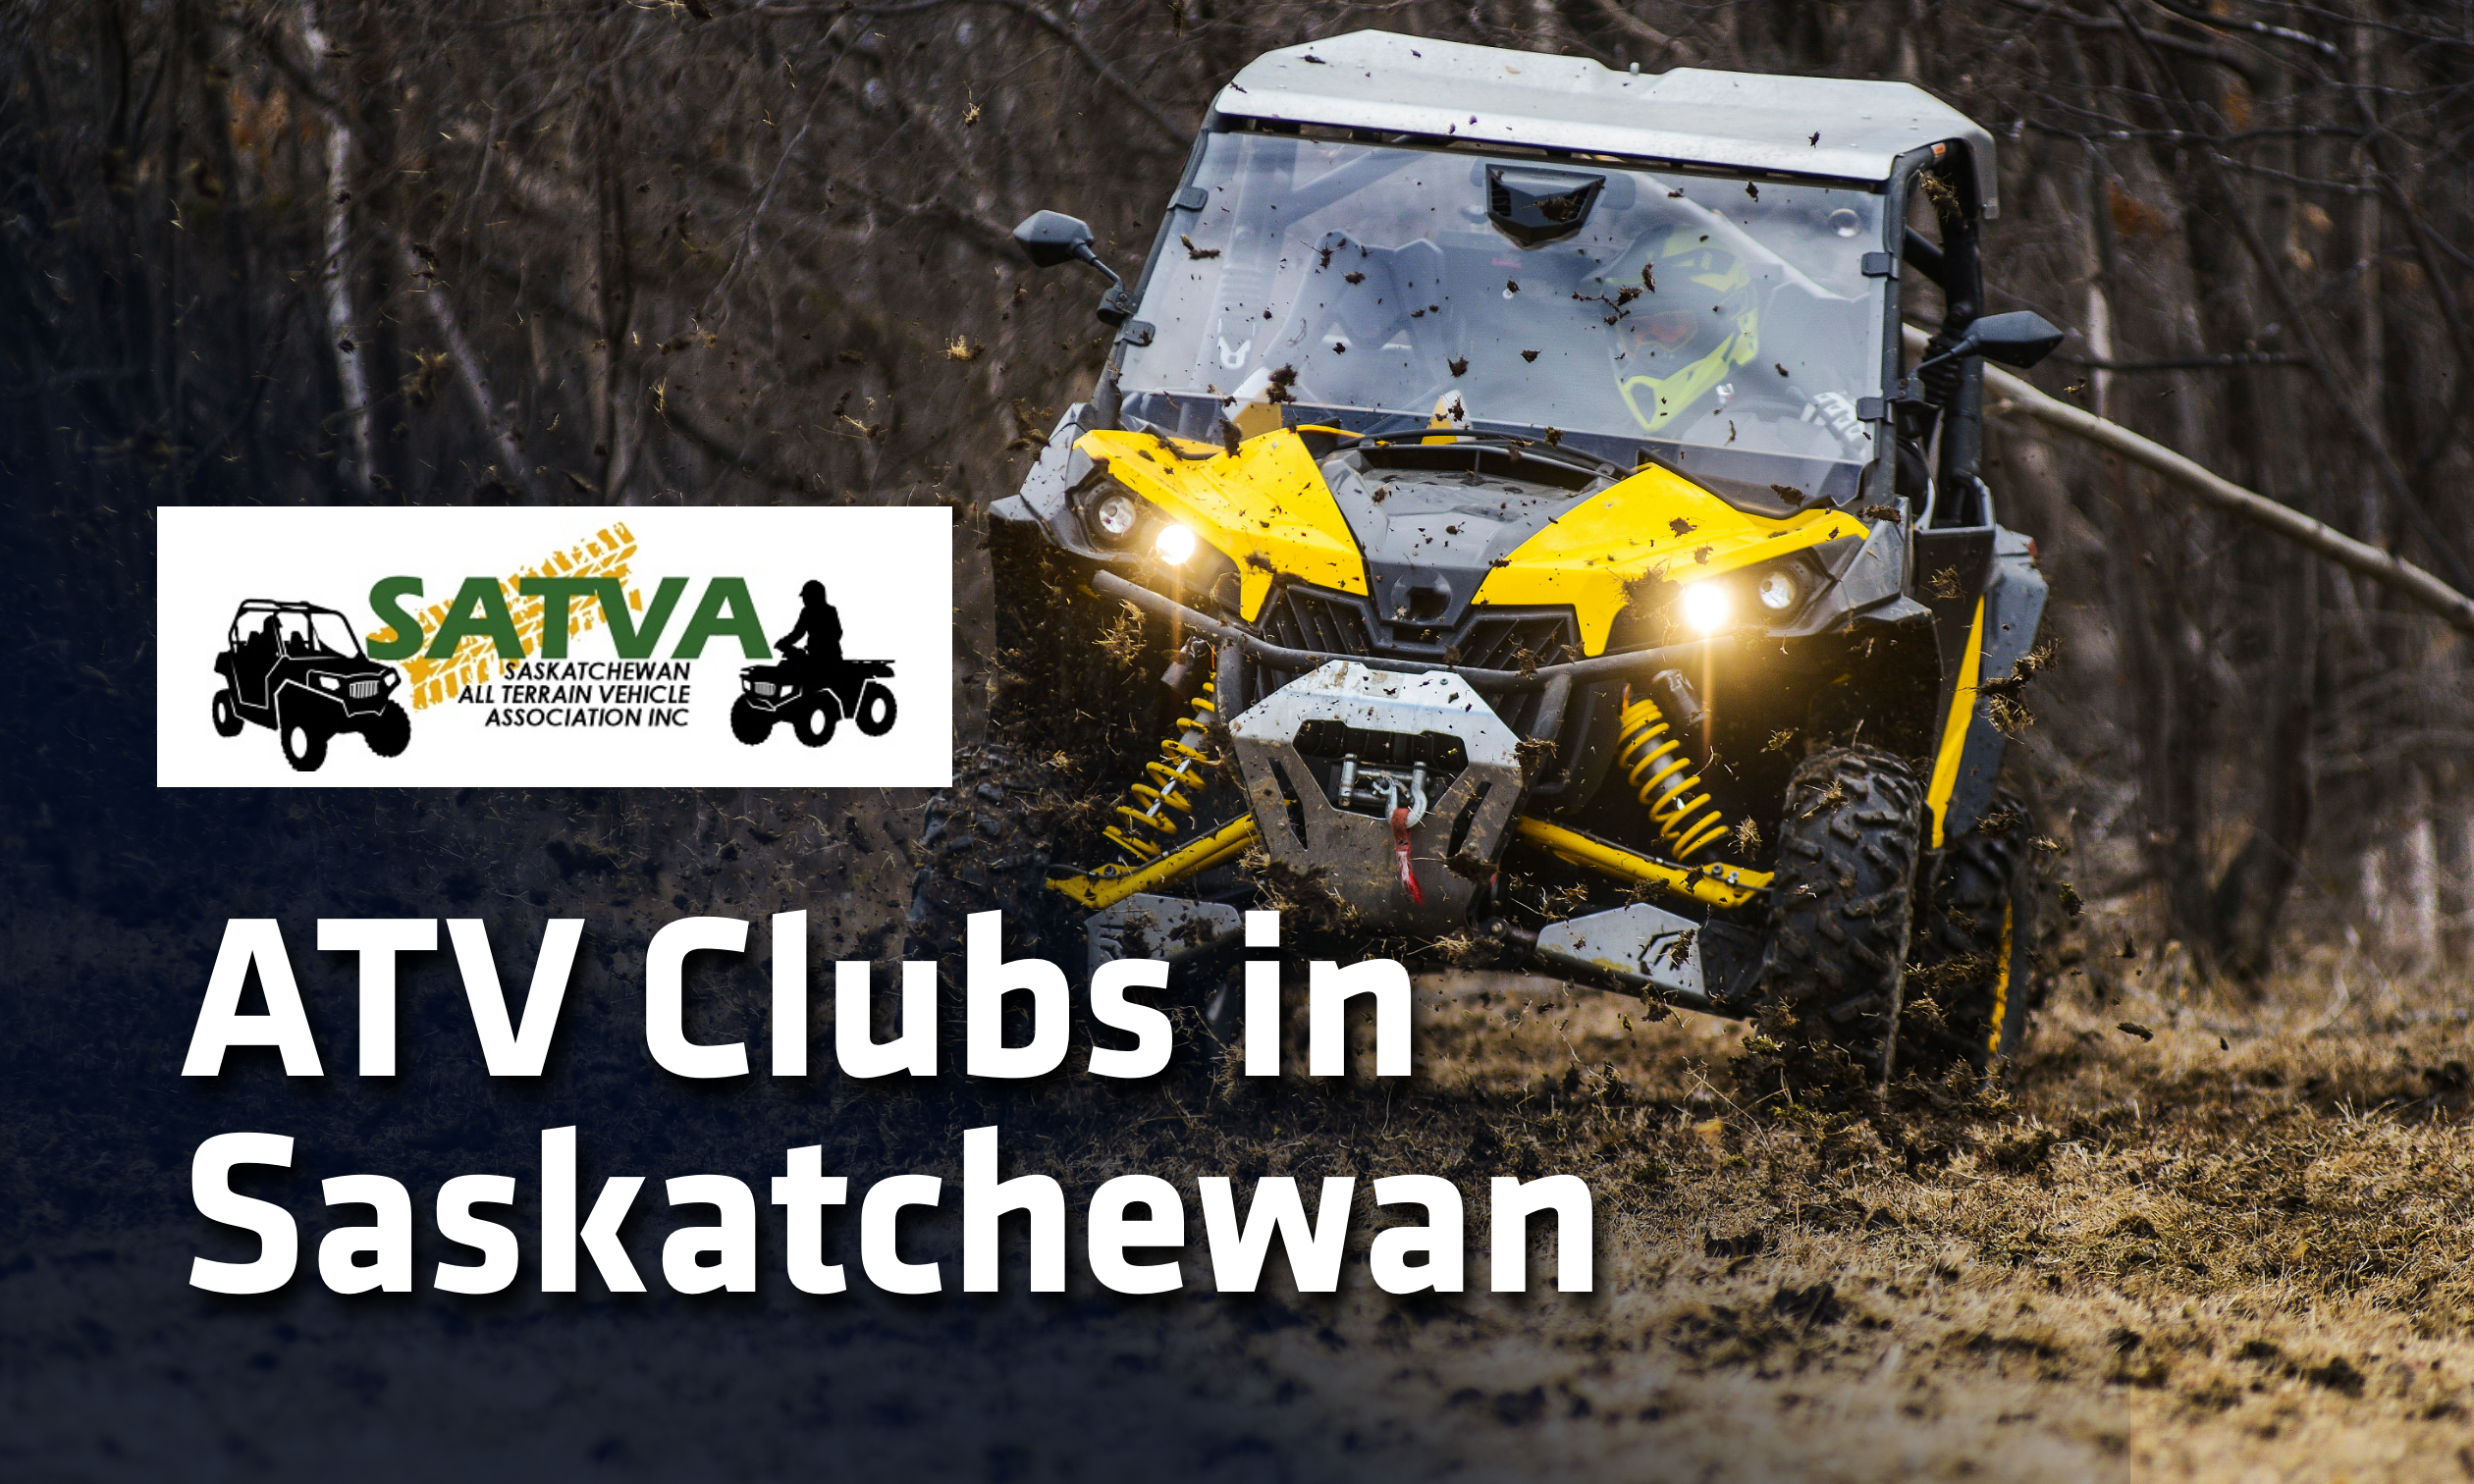 The Saskatchewan ATV Association logo. 